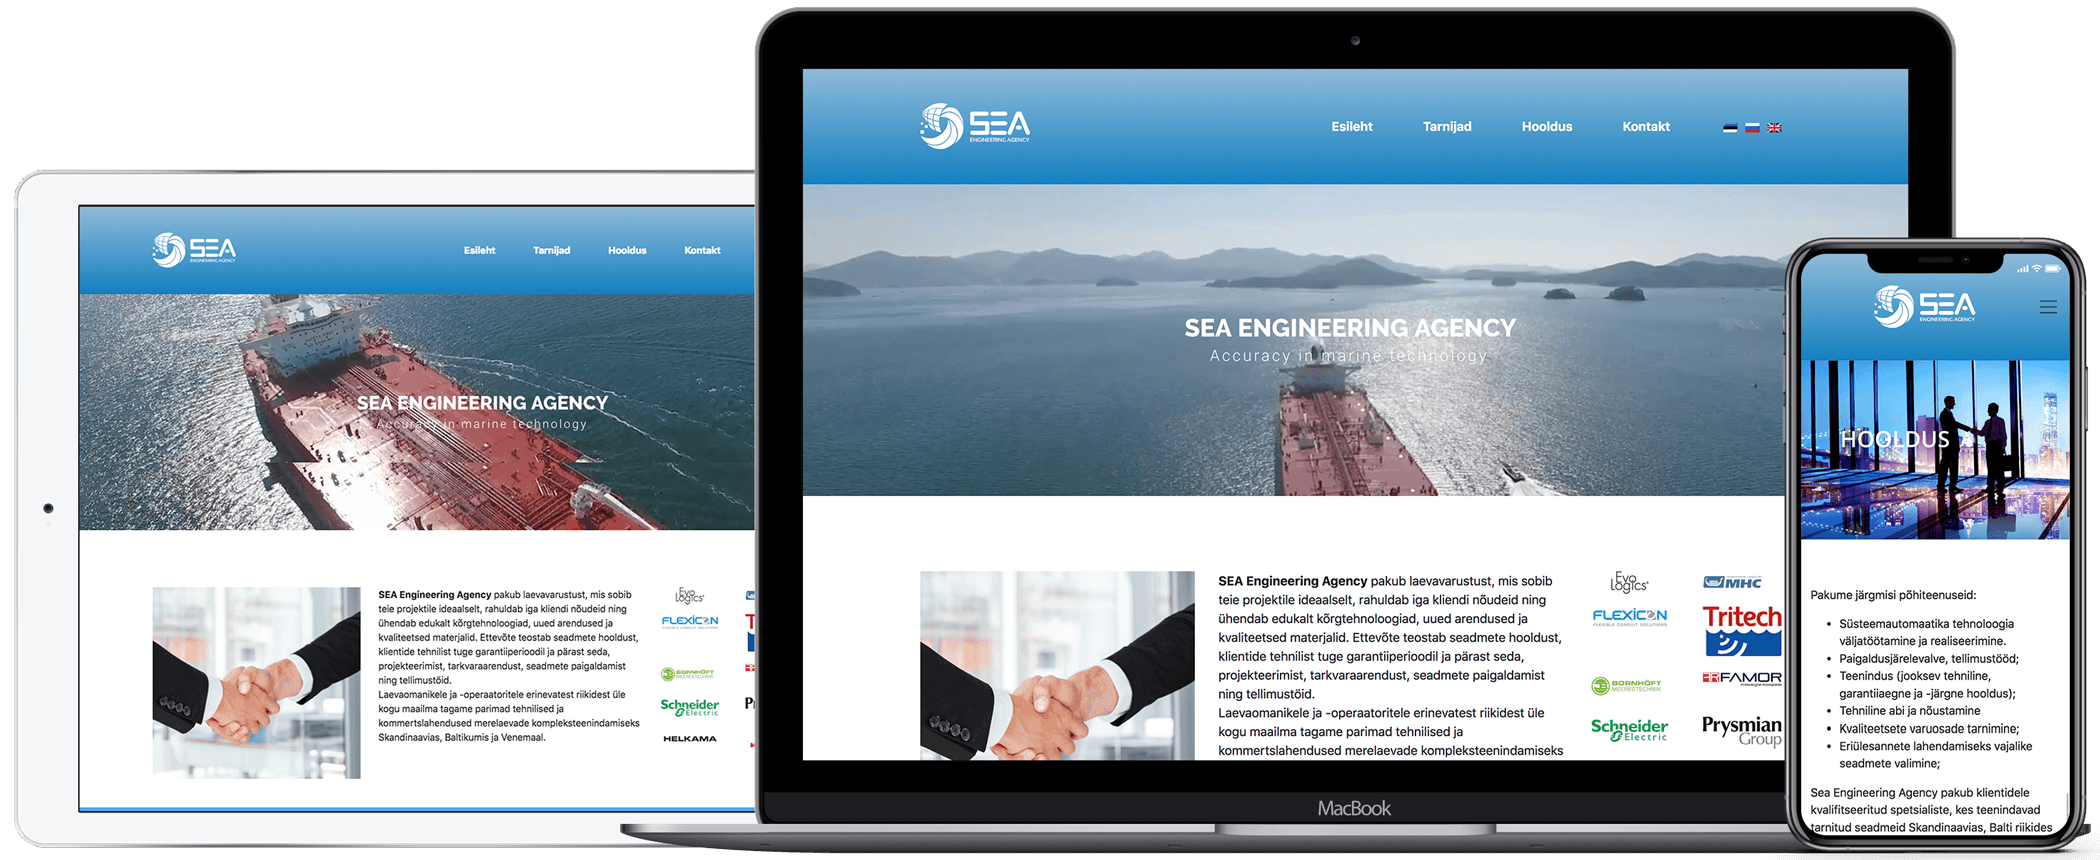 Homepage of SEA Engineering Agency, designed by iWeb